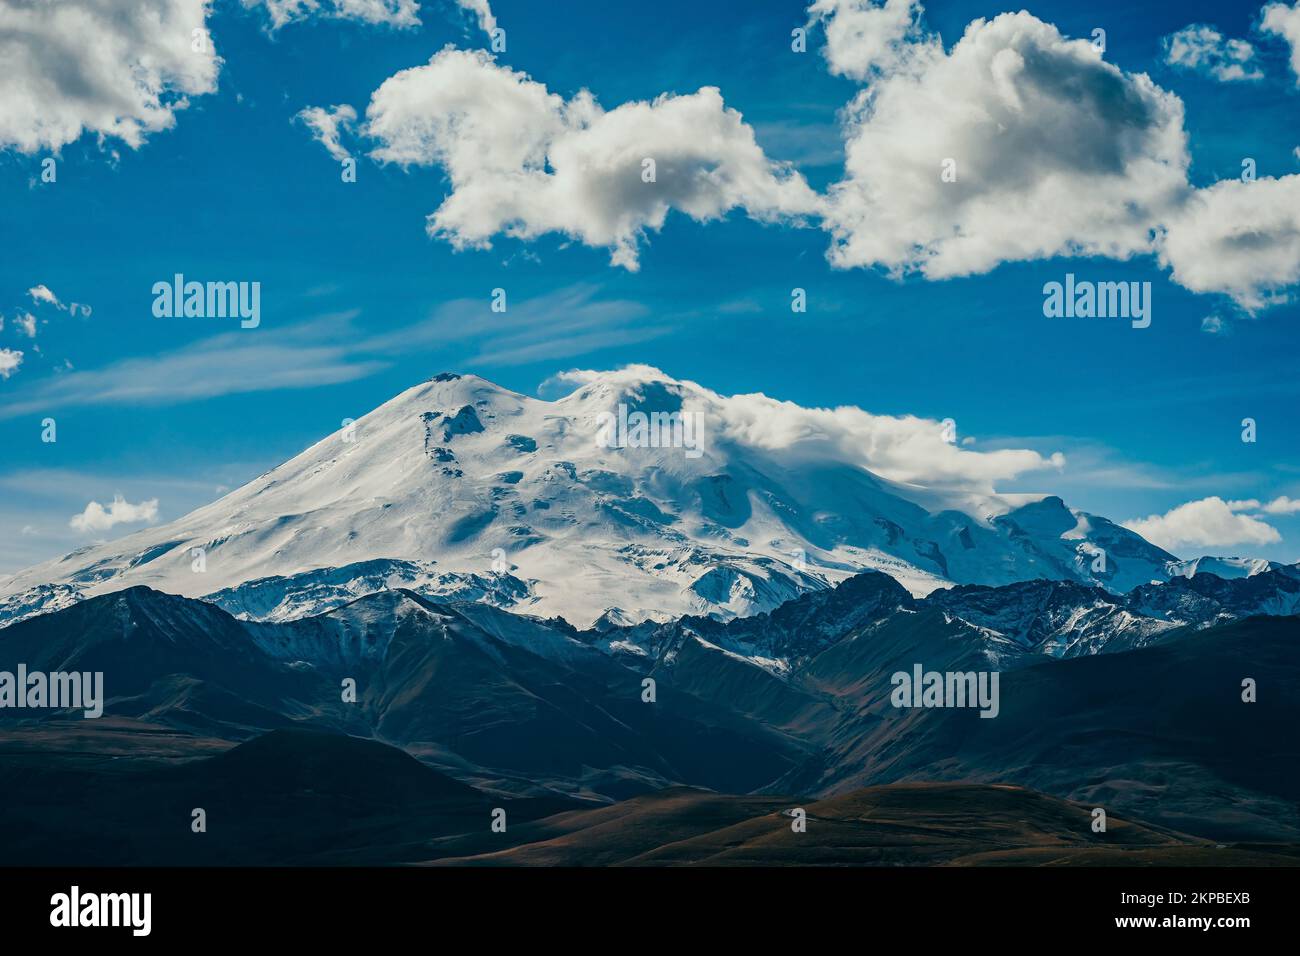 Big mountain Elbrus. Snow covered Greater Caucasus mountains. The two peaks of Mount Elbrus . Europe's highest peak. Journey to Kabardino-Balkaria. Russia. Stock Photo